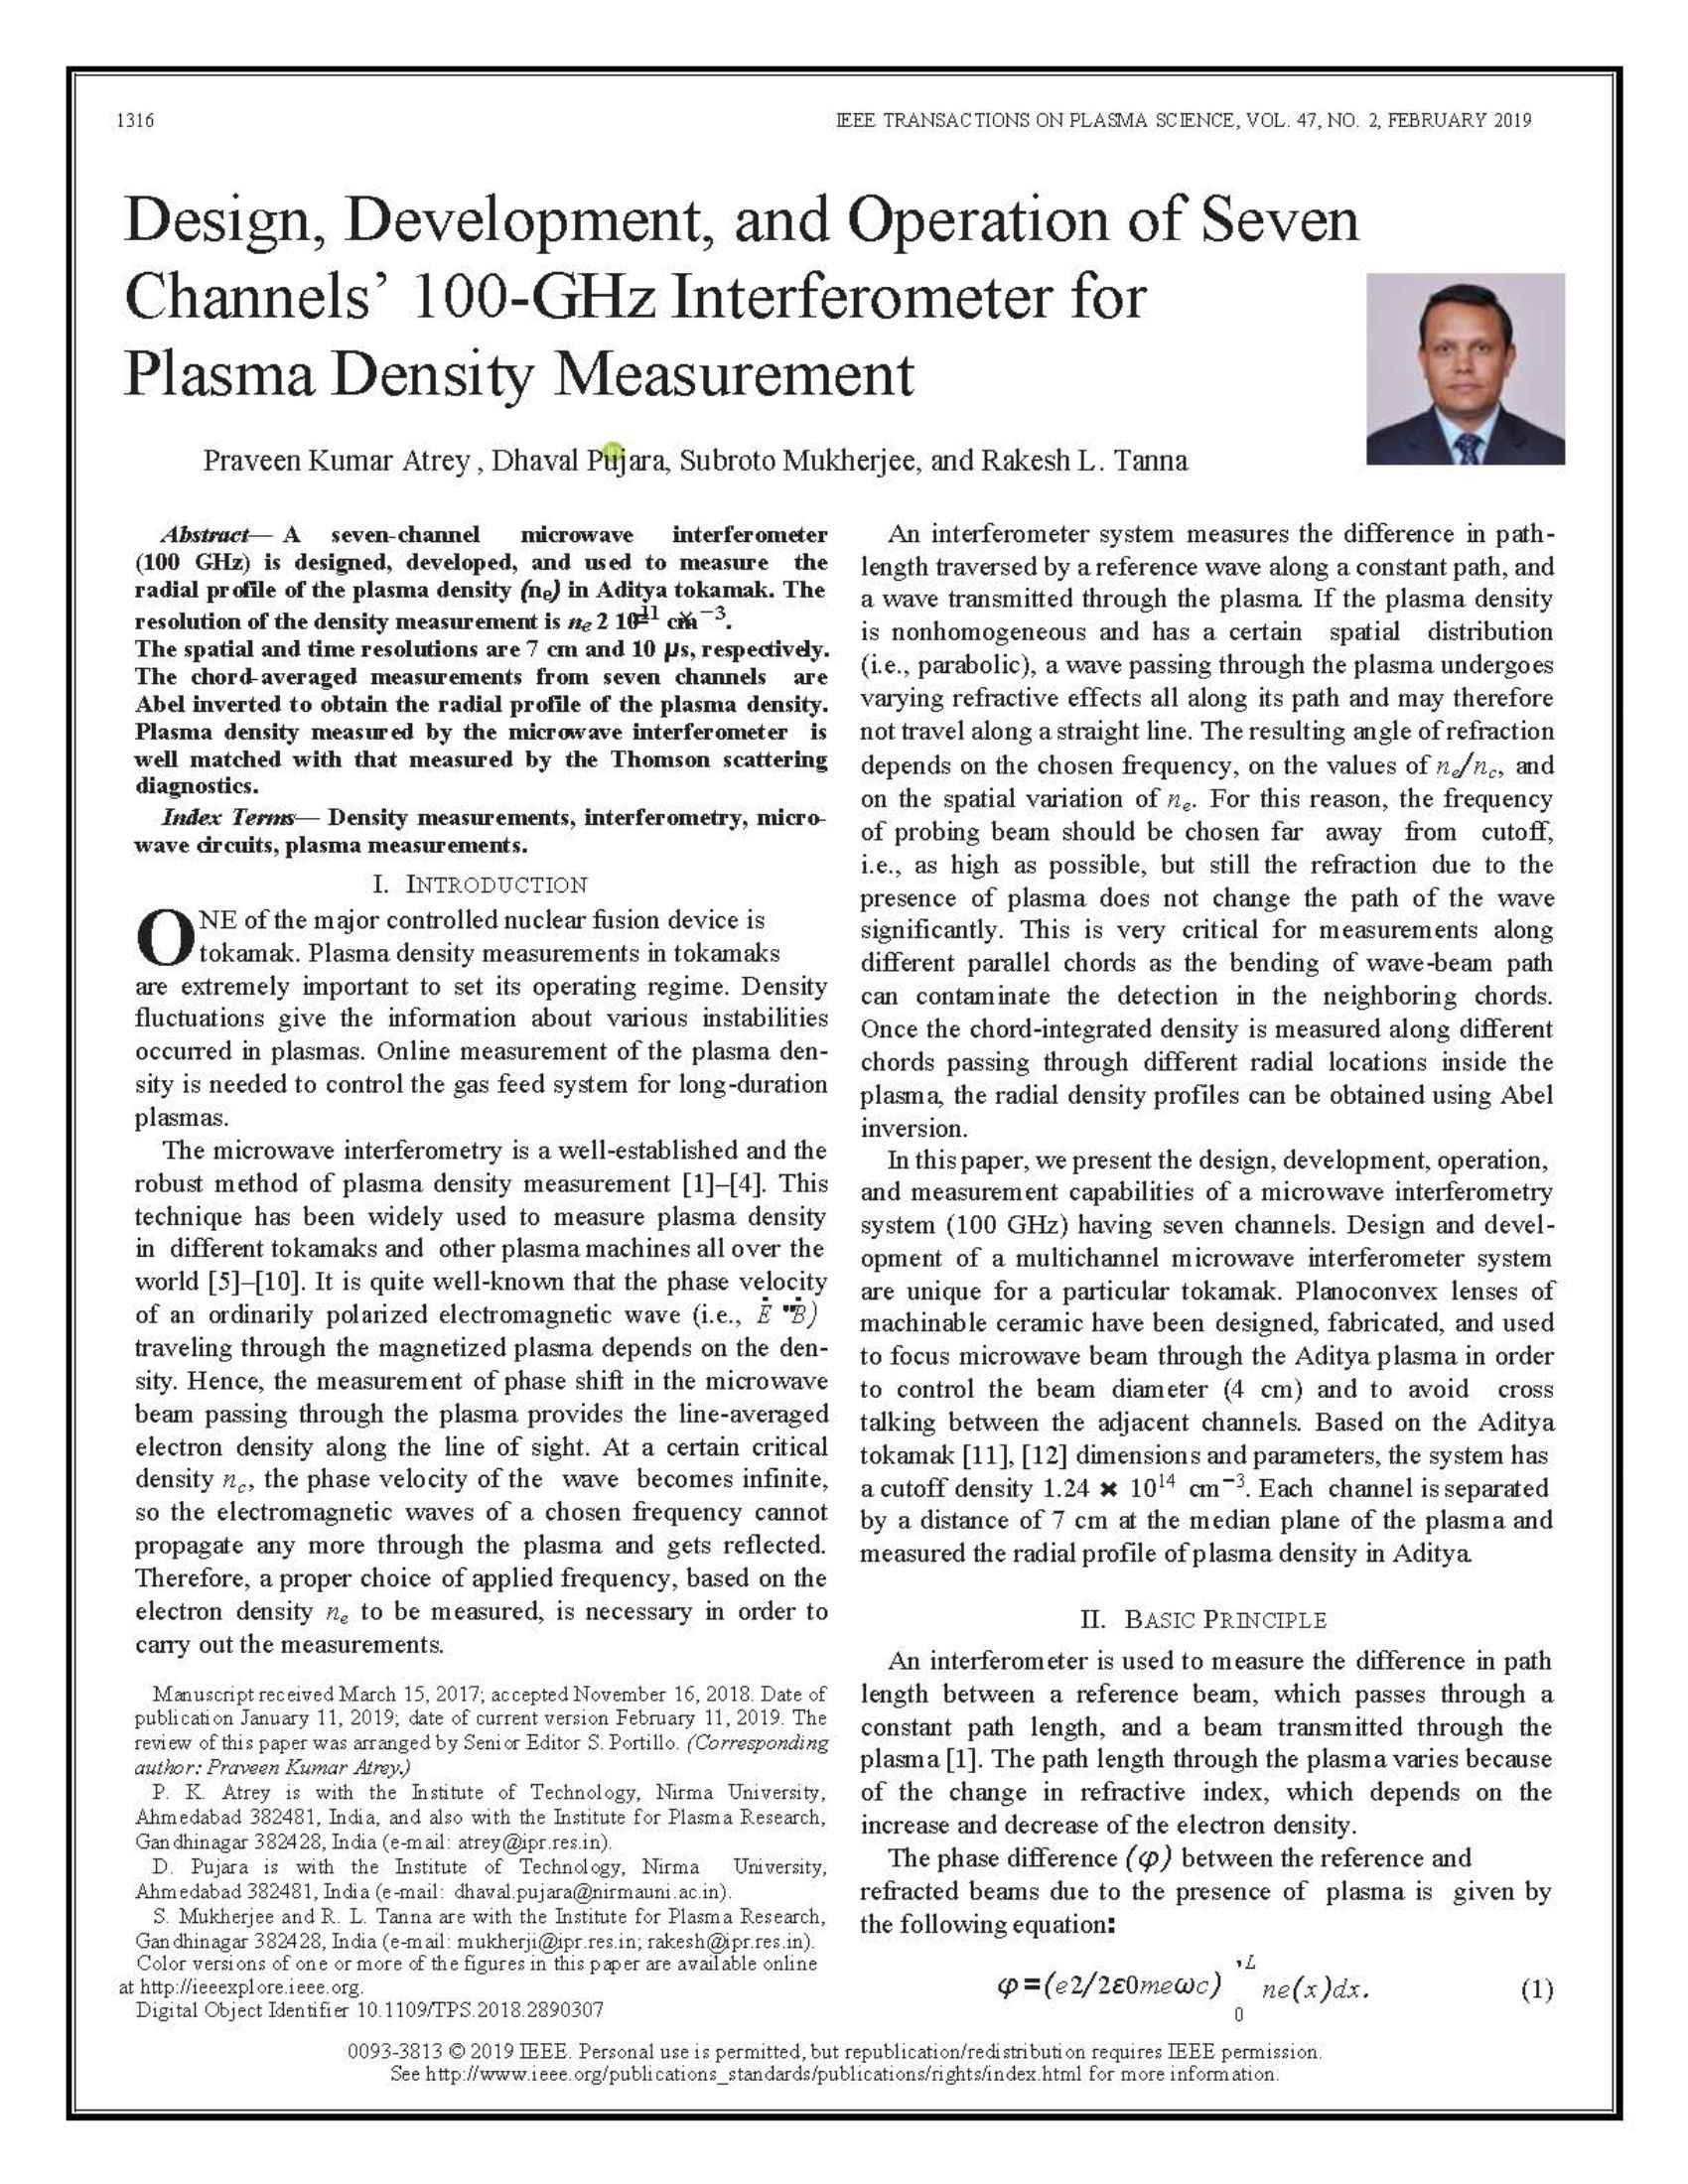 Design, Development, and Operation of Seven Channels? 100-GHz Interferometer for Plasma Density Measurement